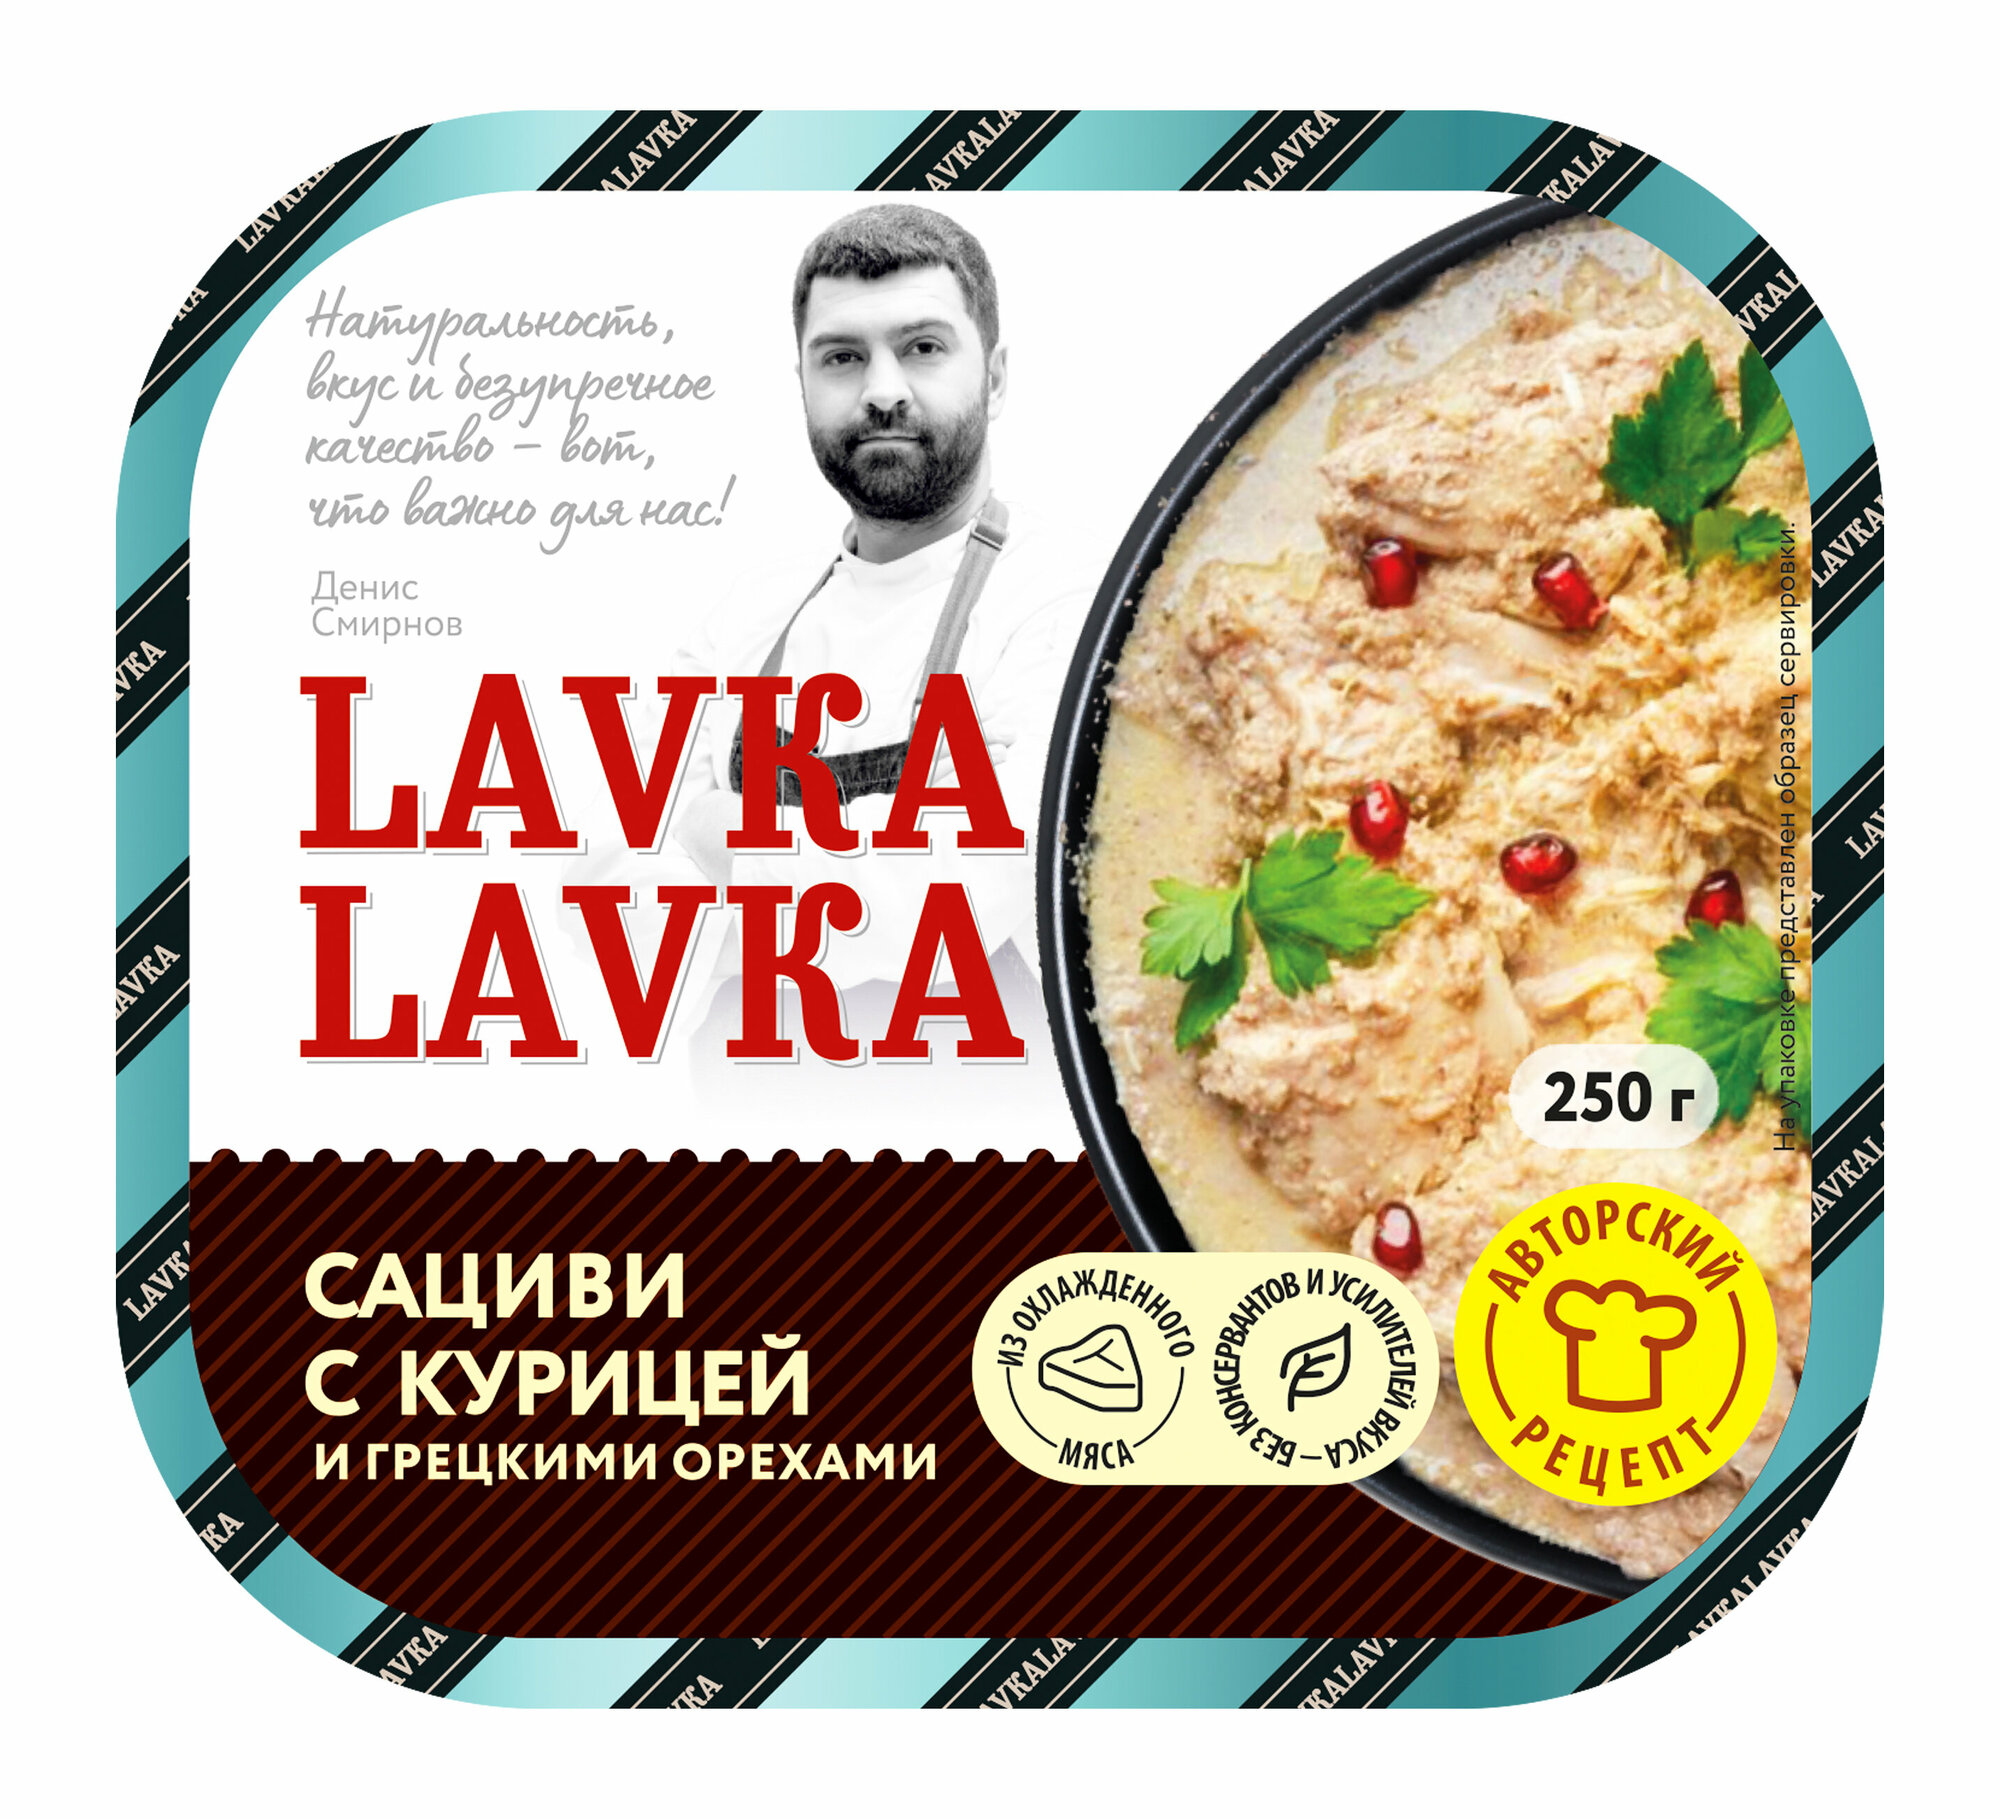 Сациви с курицей и грецкими орехами 4 уп. по 250 гр. (LavkaLavka)